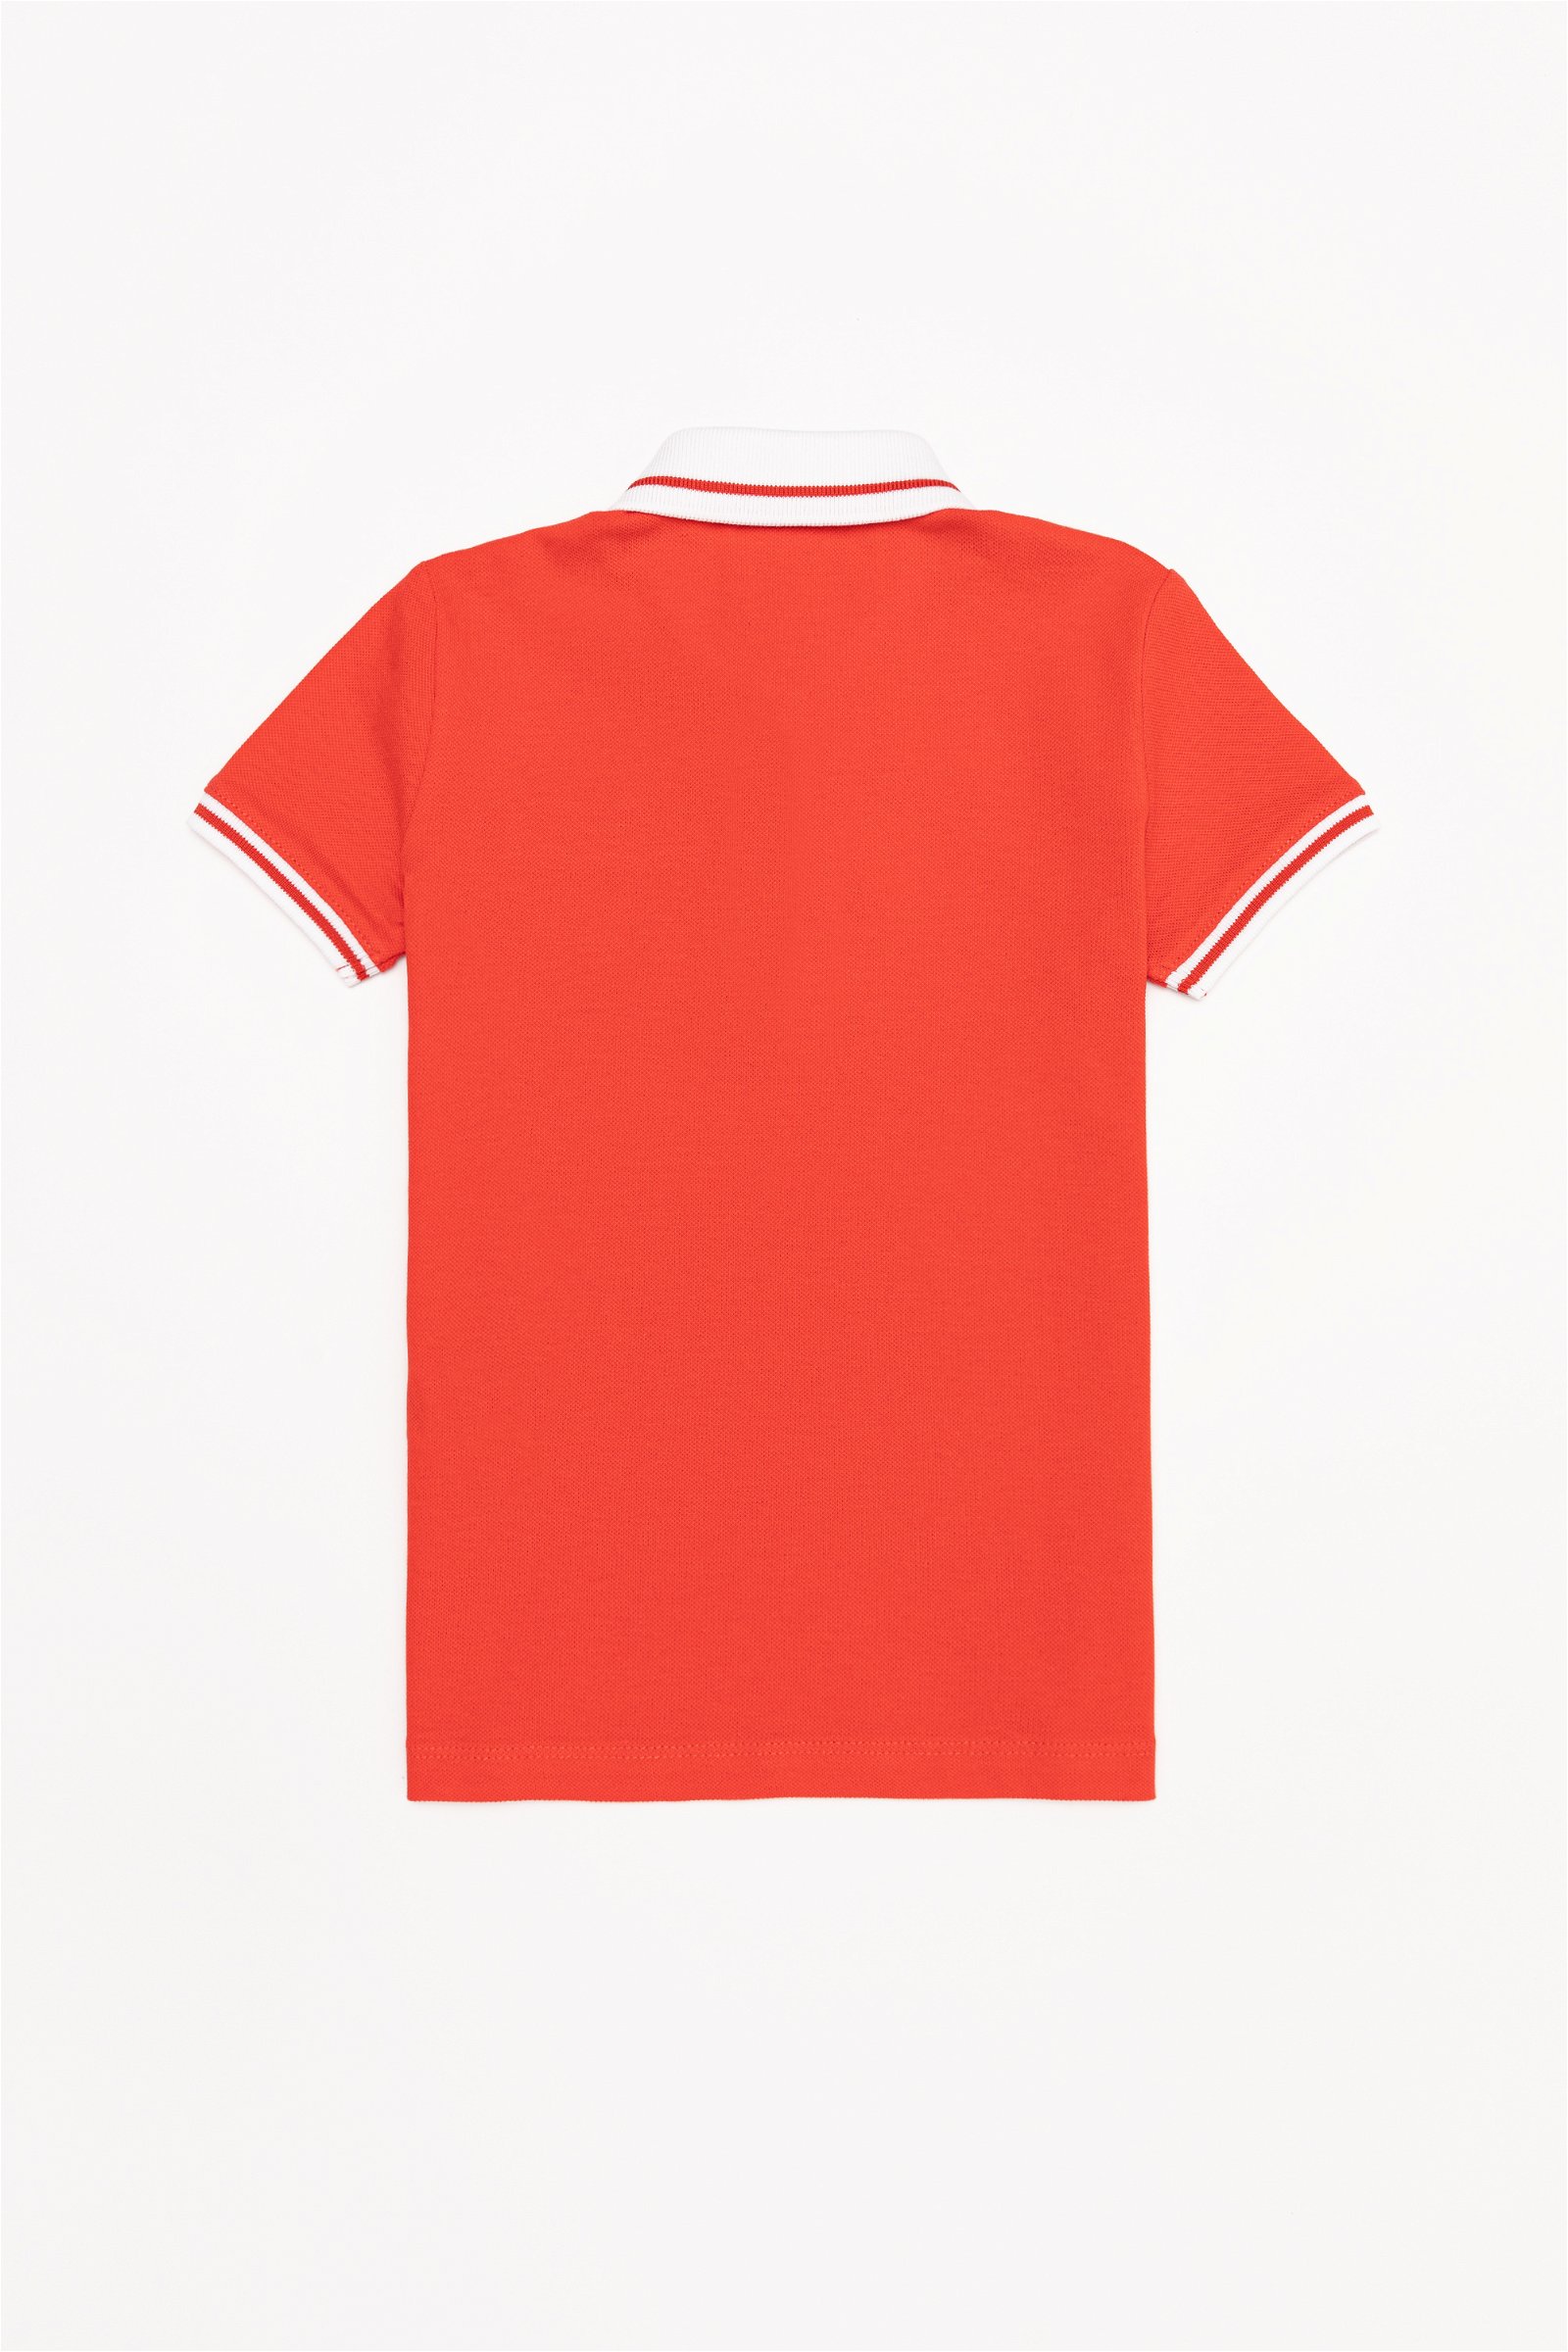 تی شرت یقه پولو قرمز  اندامی  دخترانه یو اس پولو | US POLO ASSN